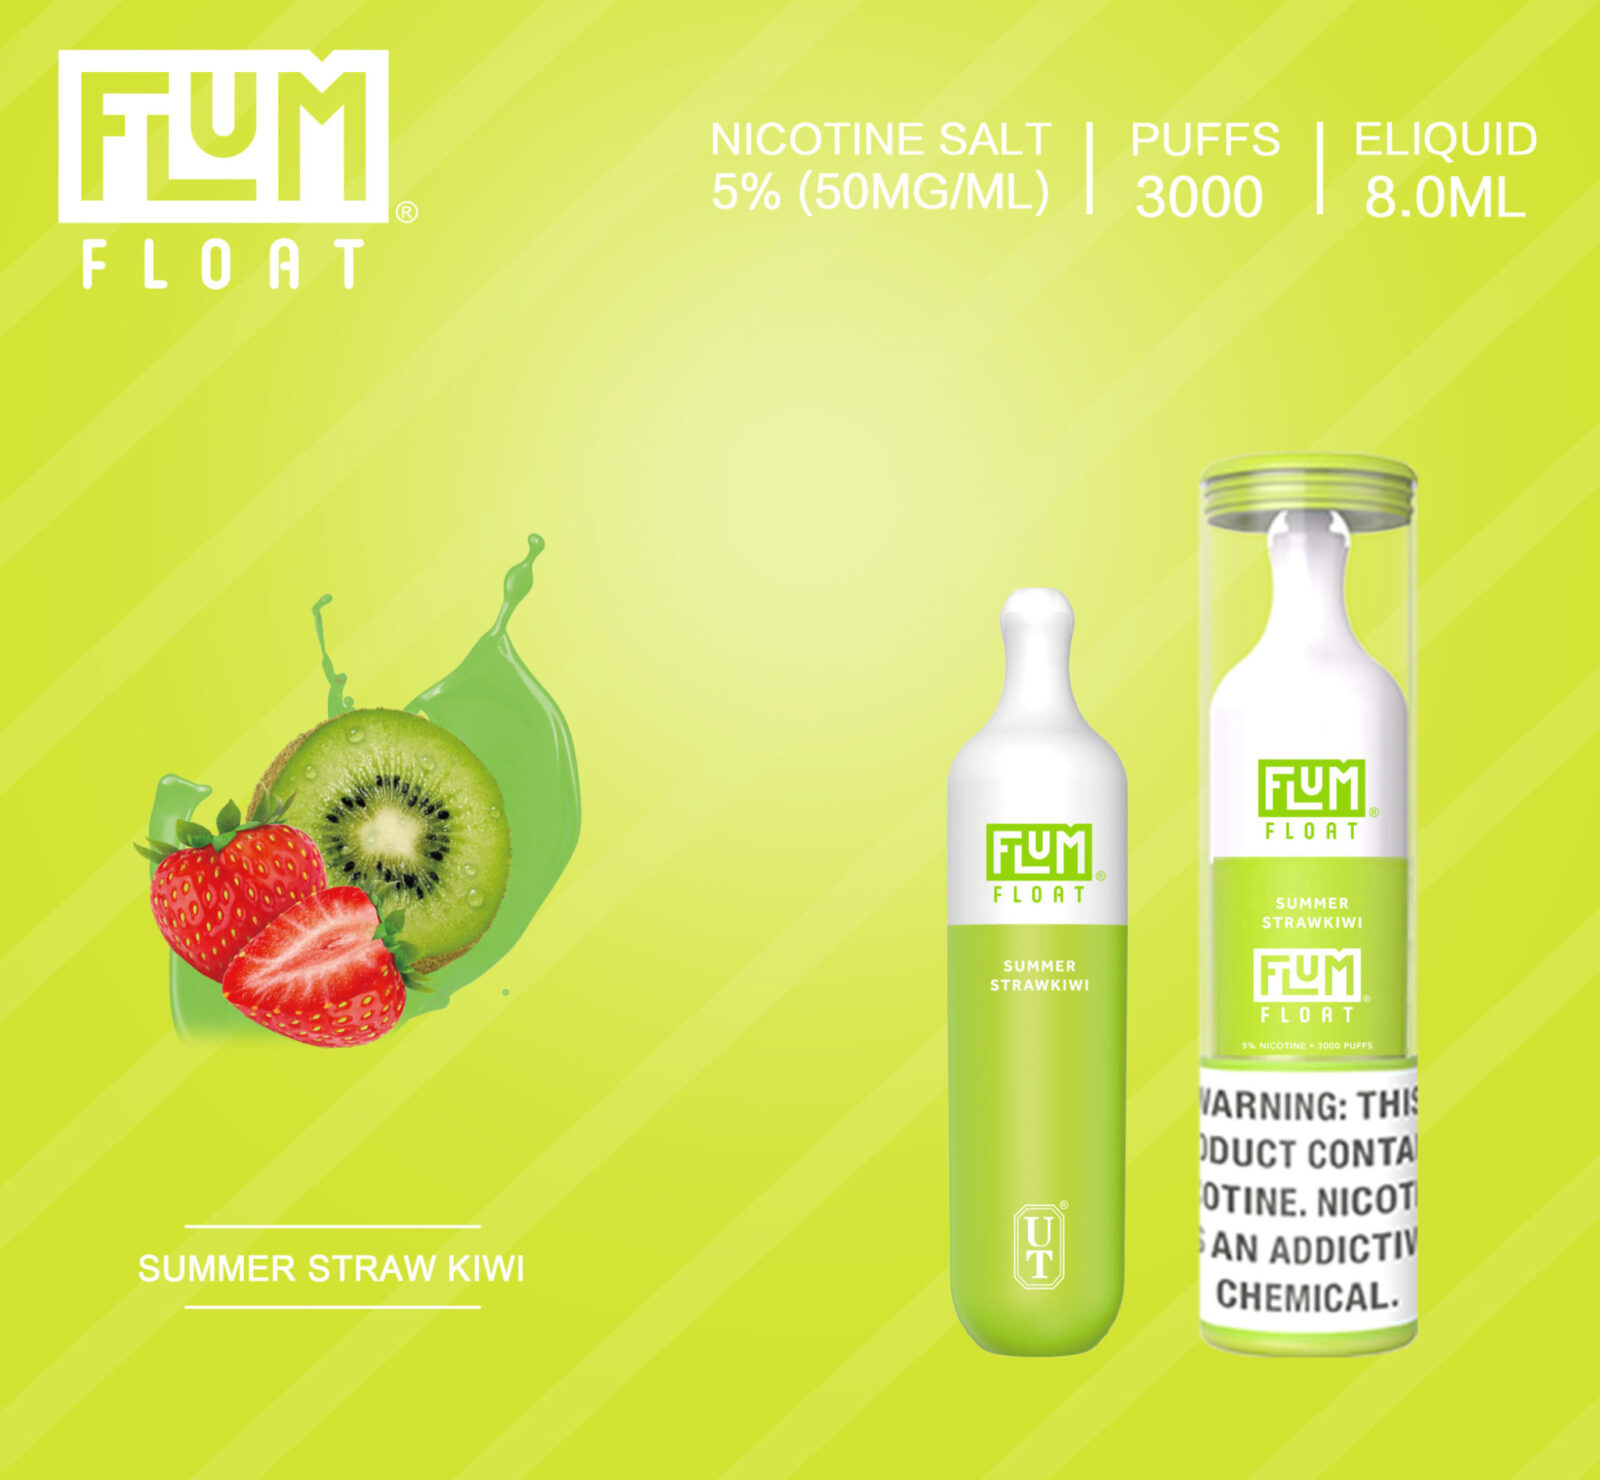 flum-flum-disposable-vape-pen-float-3000